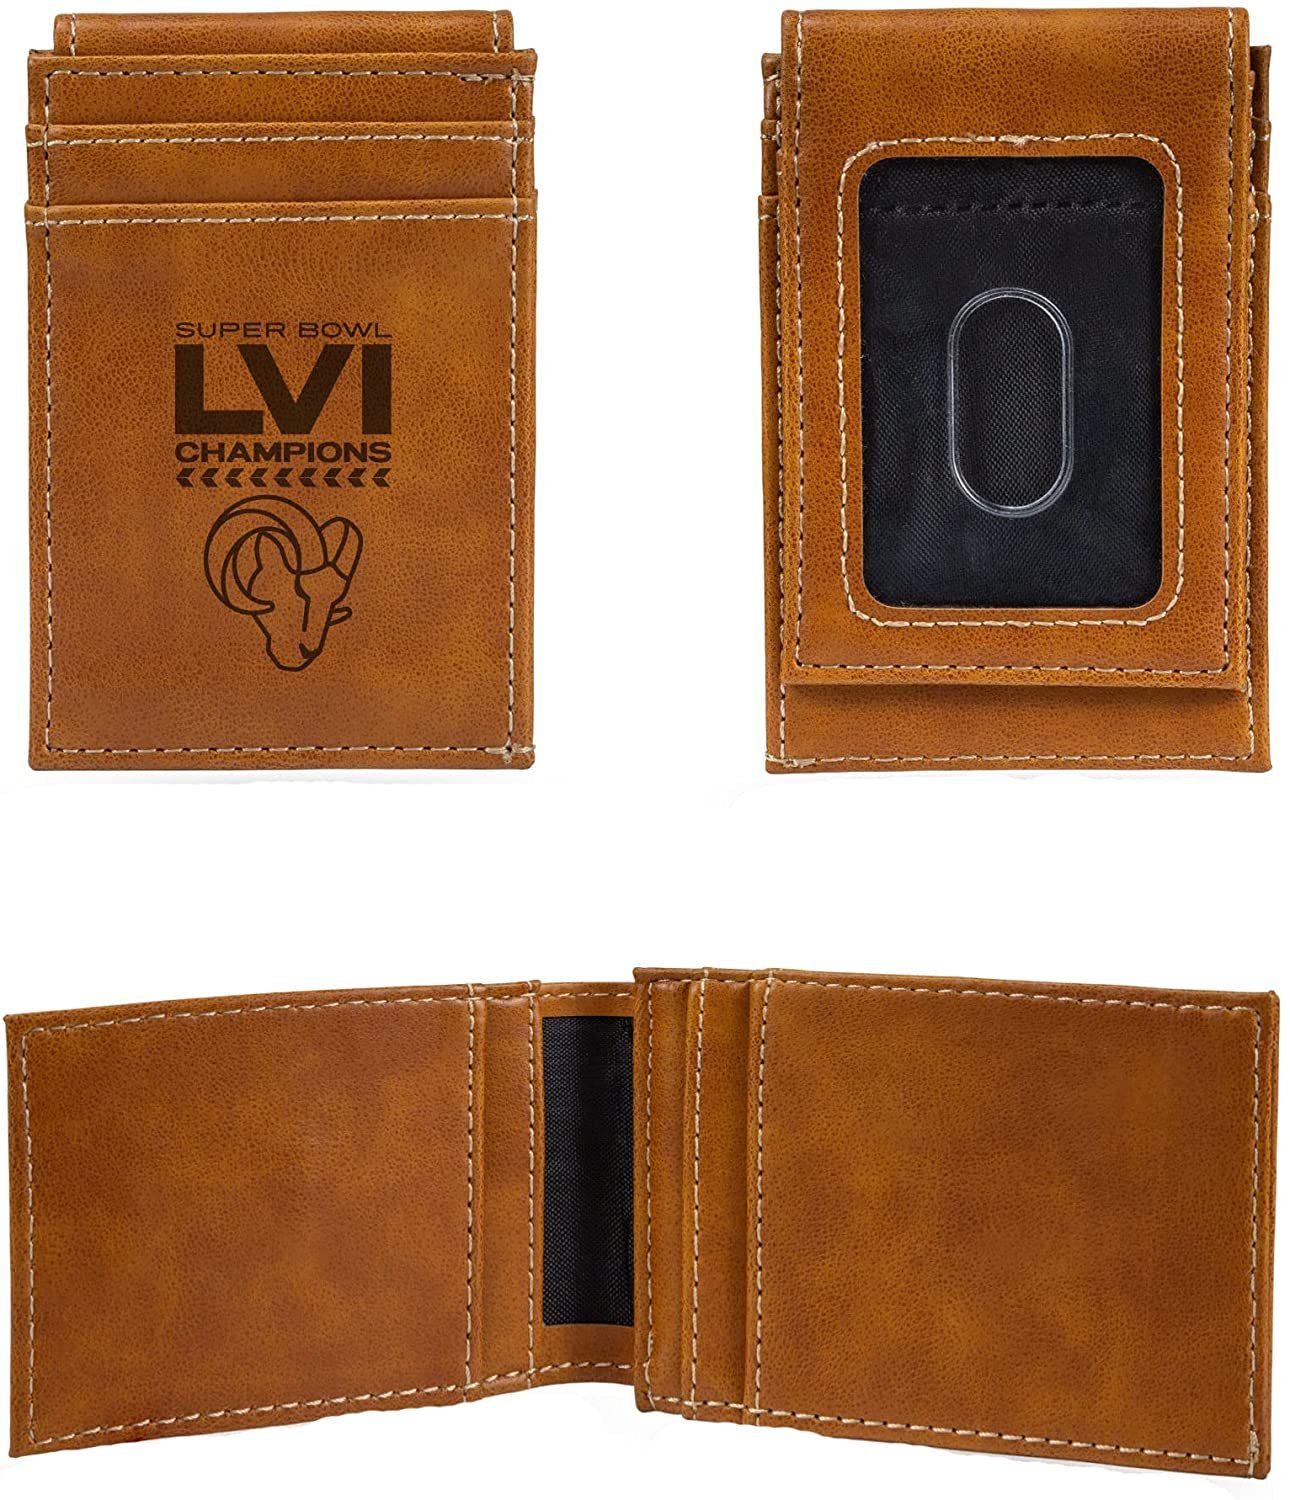 Los Angeles Rams Super Bowl LVI Champions Brown Leather Wallet, Front Pocket Magnetic Money Clip, Laser Engraved